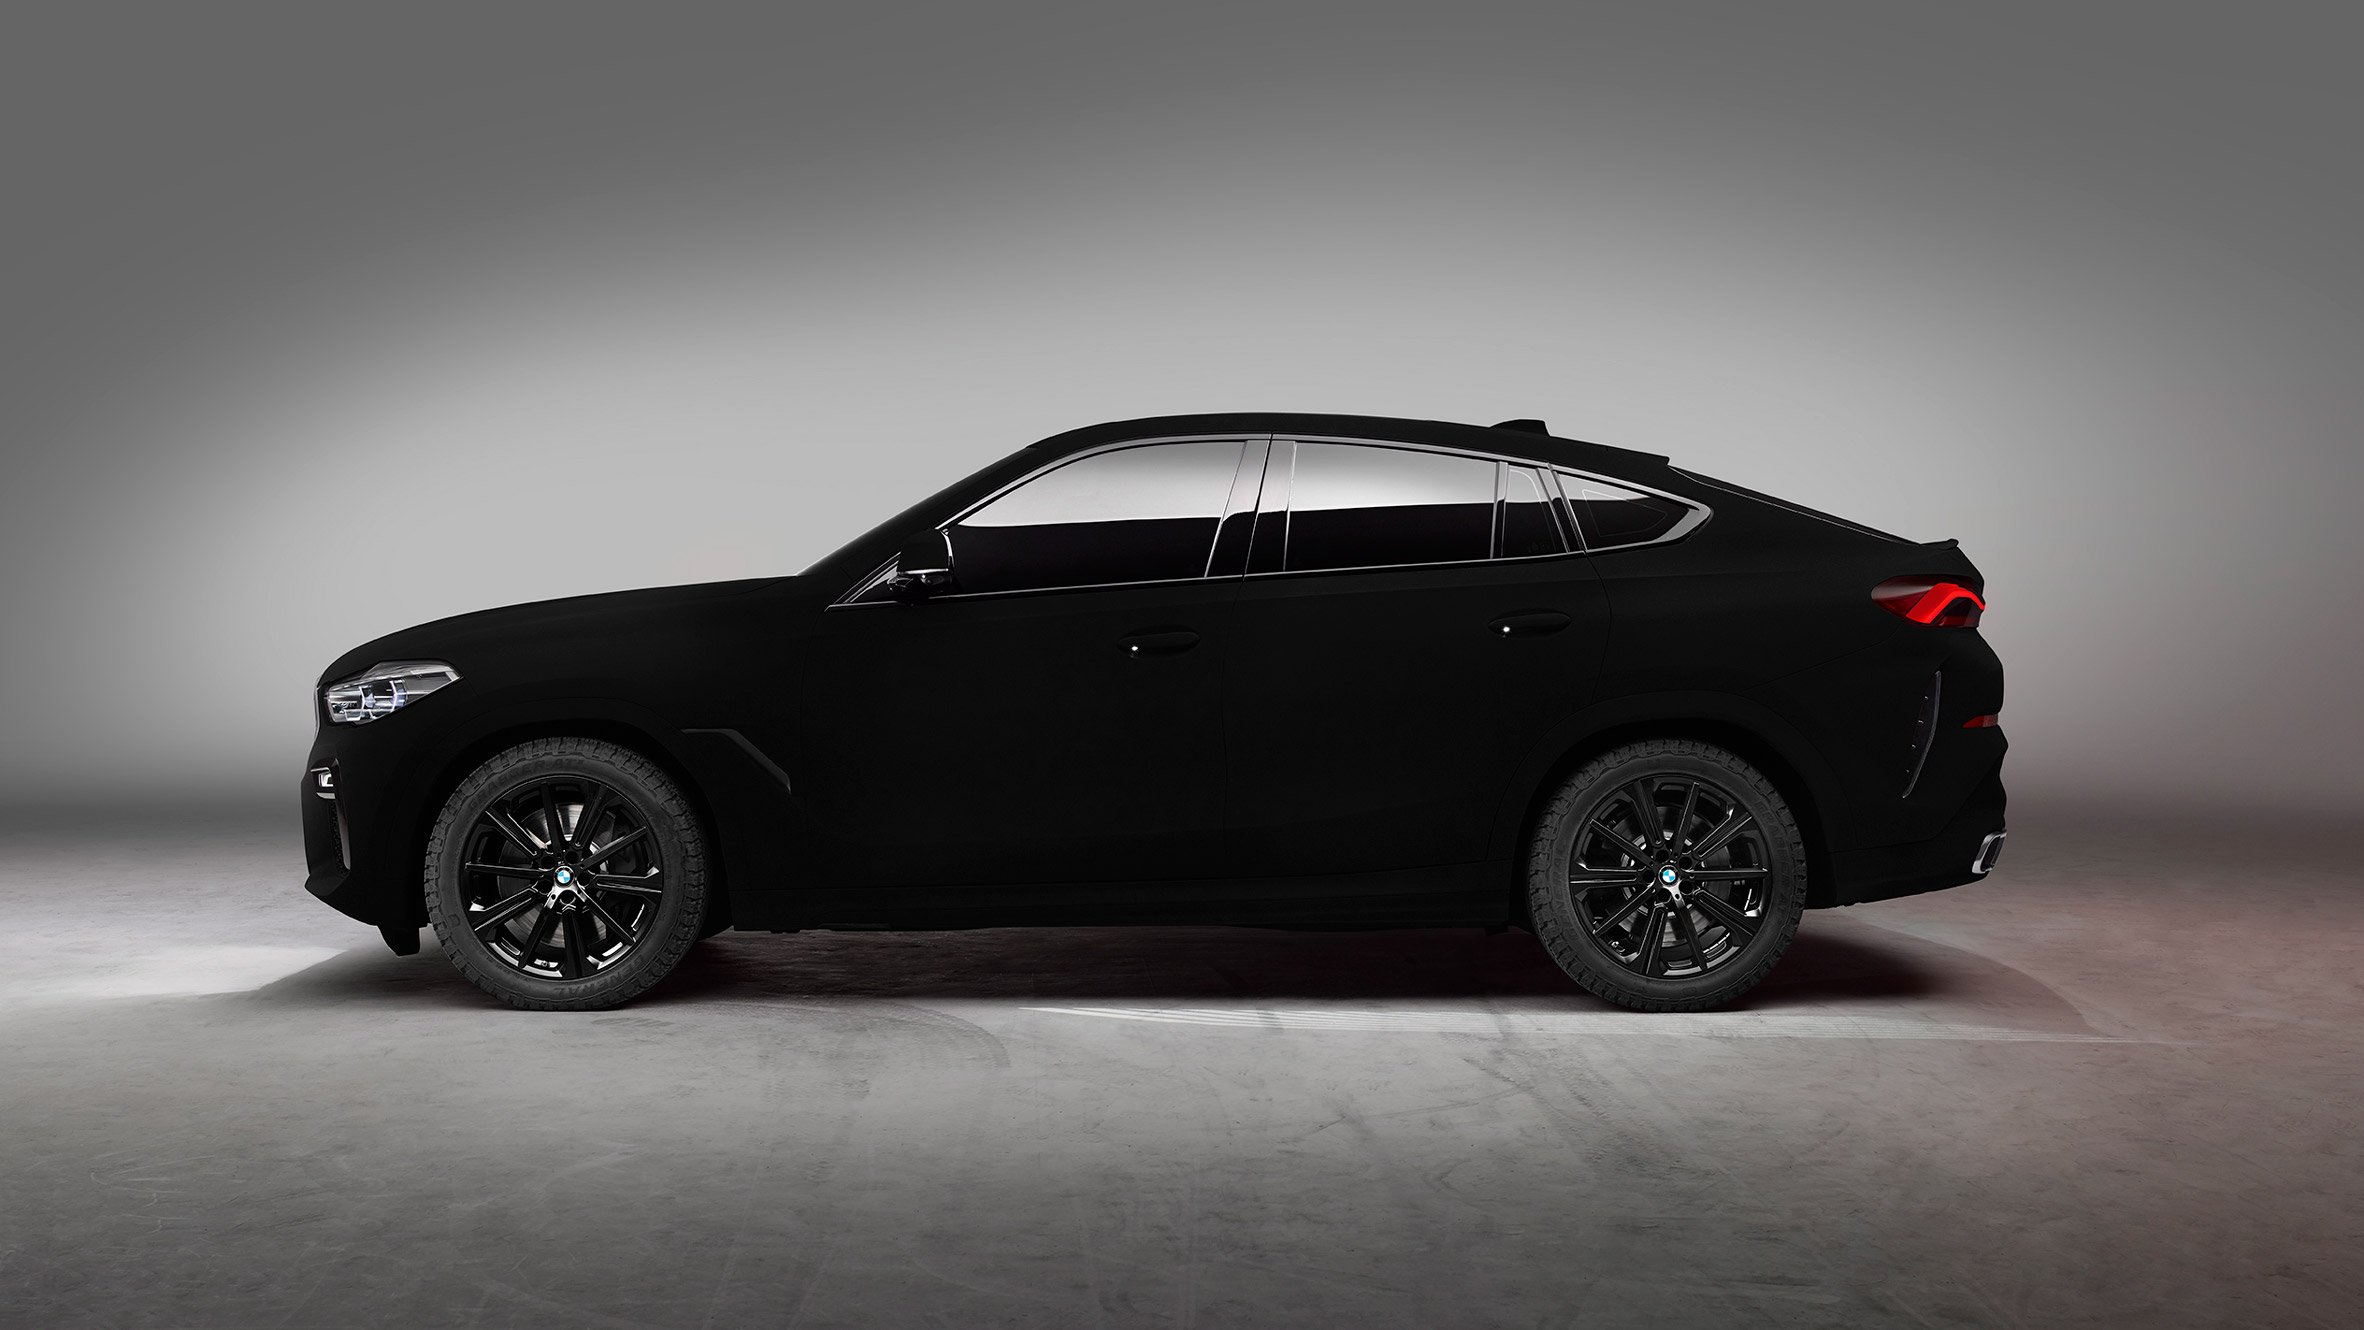 BMW unveils blackest black BMW VBX6 car sprayed with Vantablack